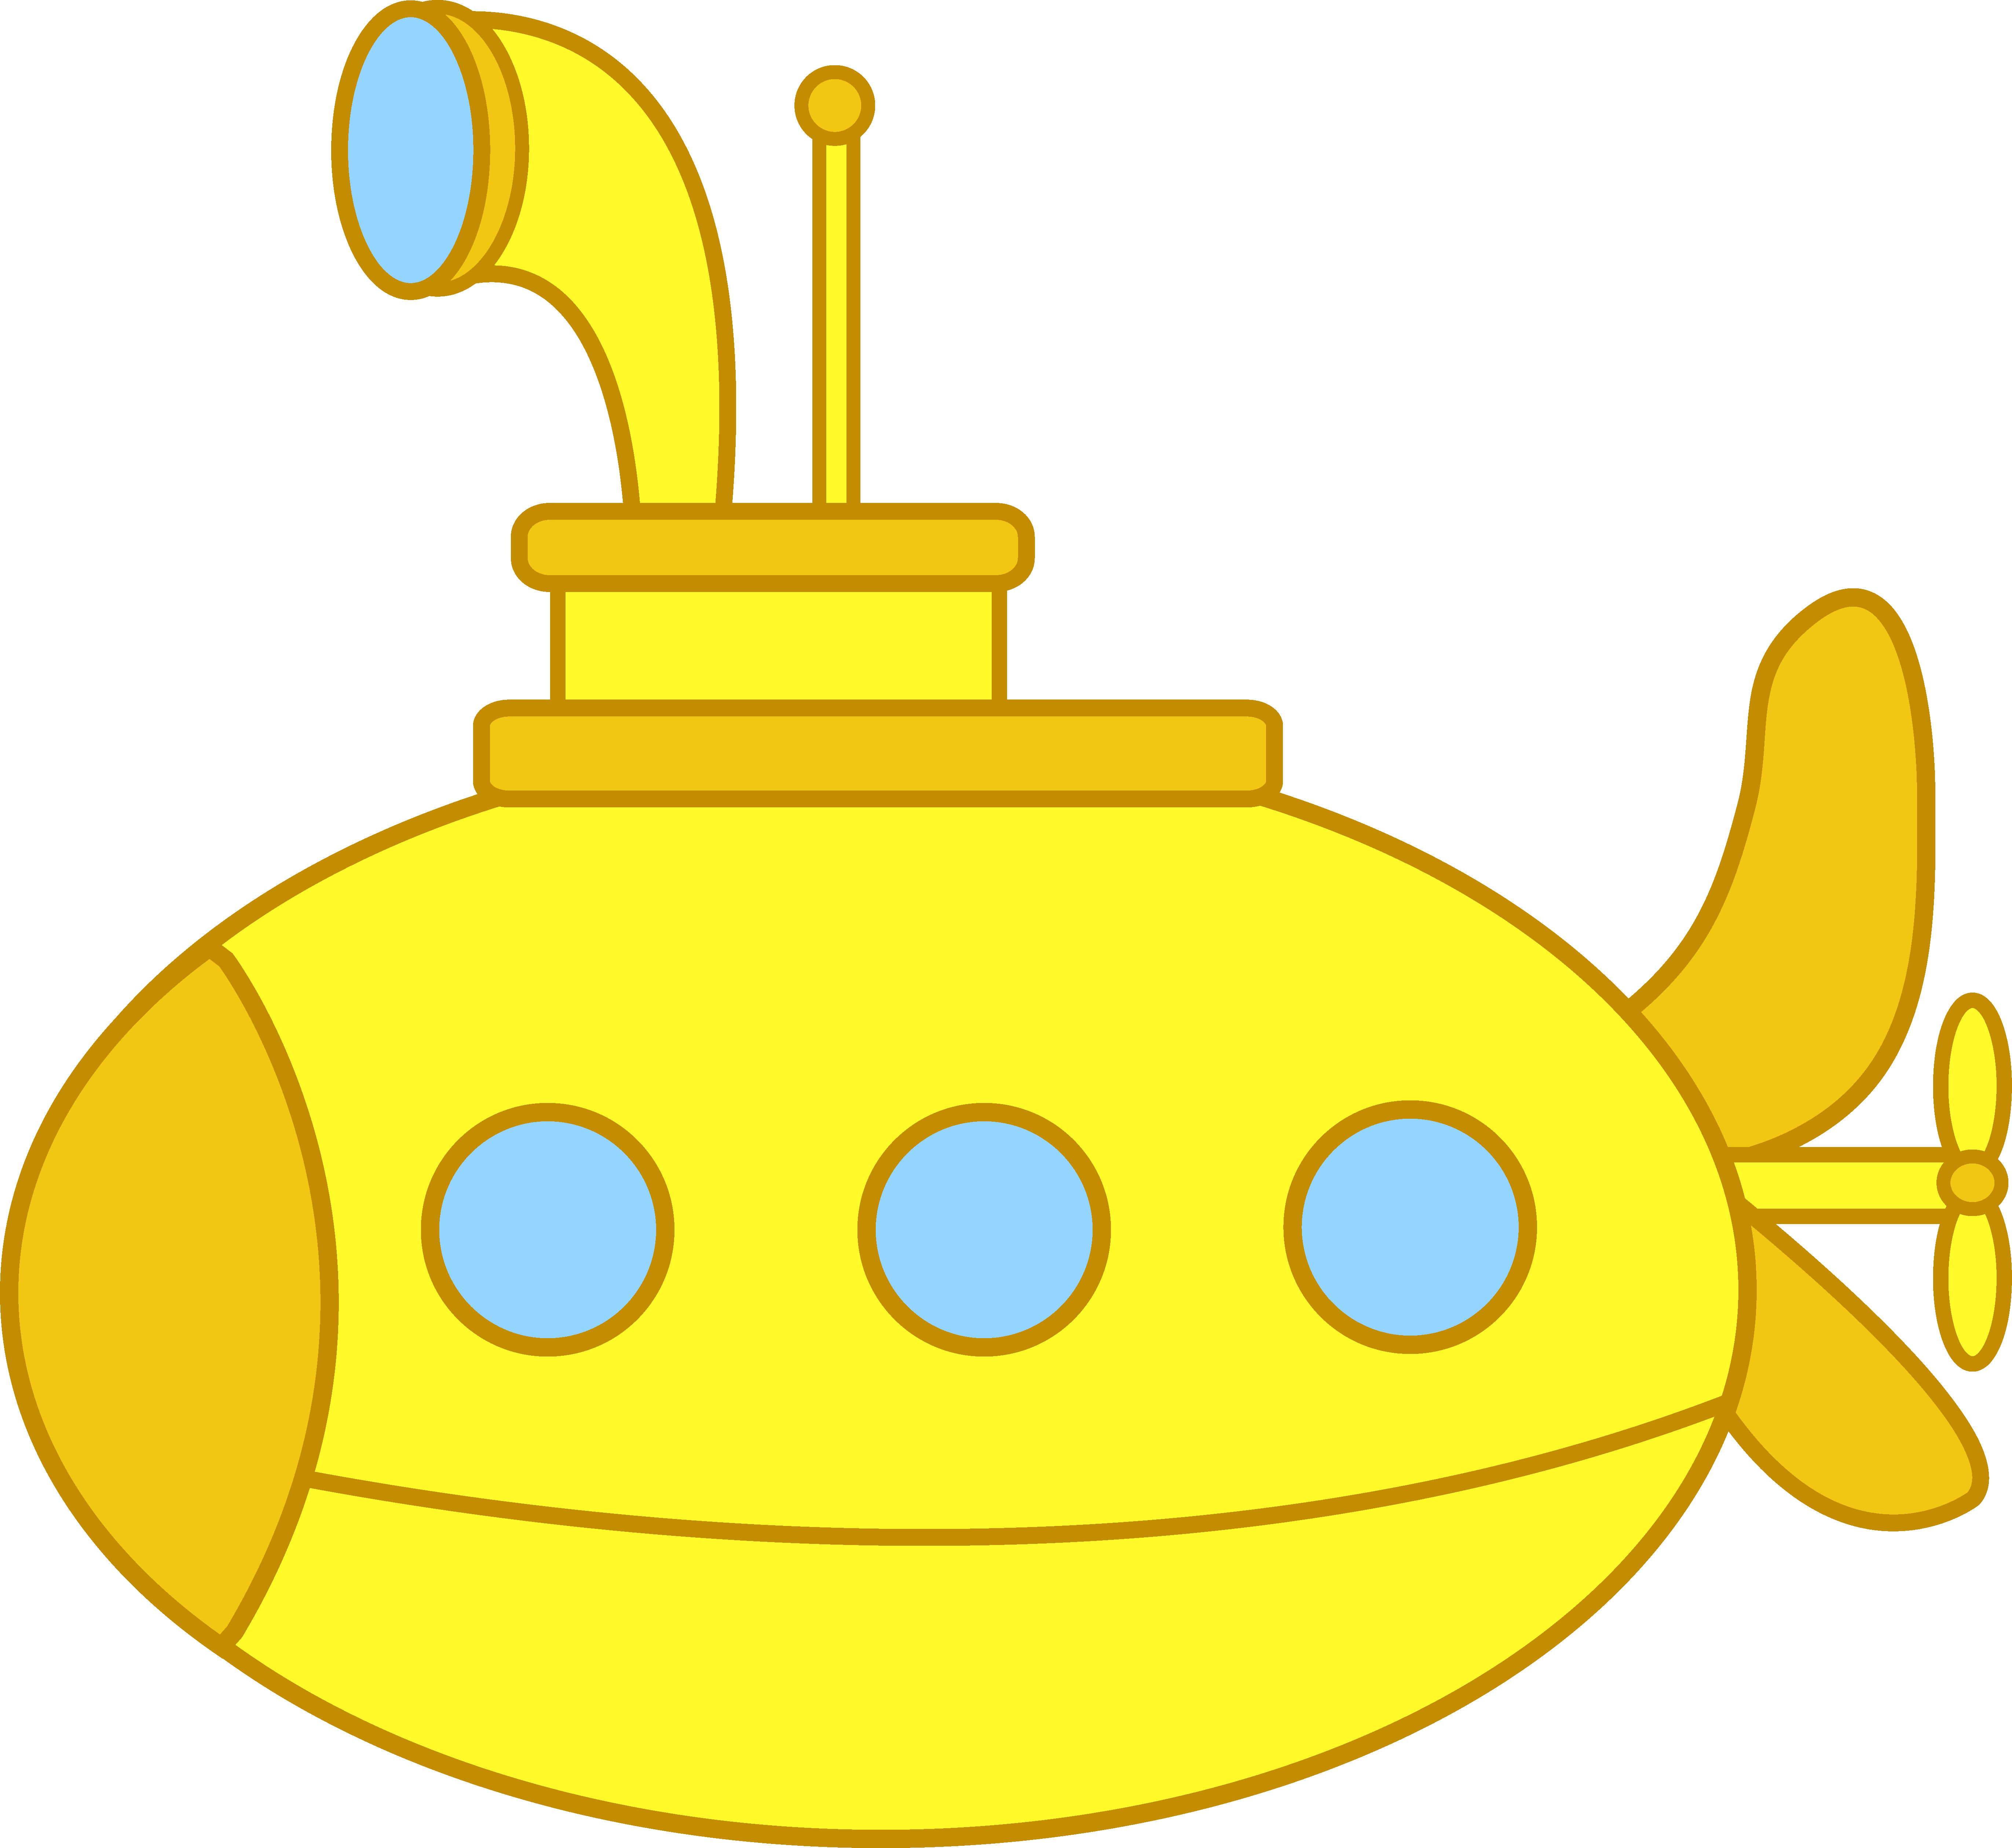 Submarine clipart ocean. Cute little yellow free